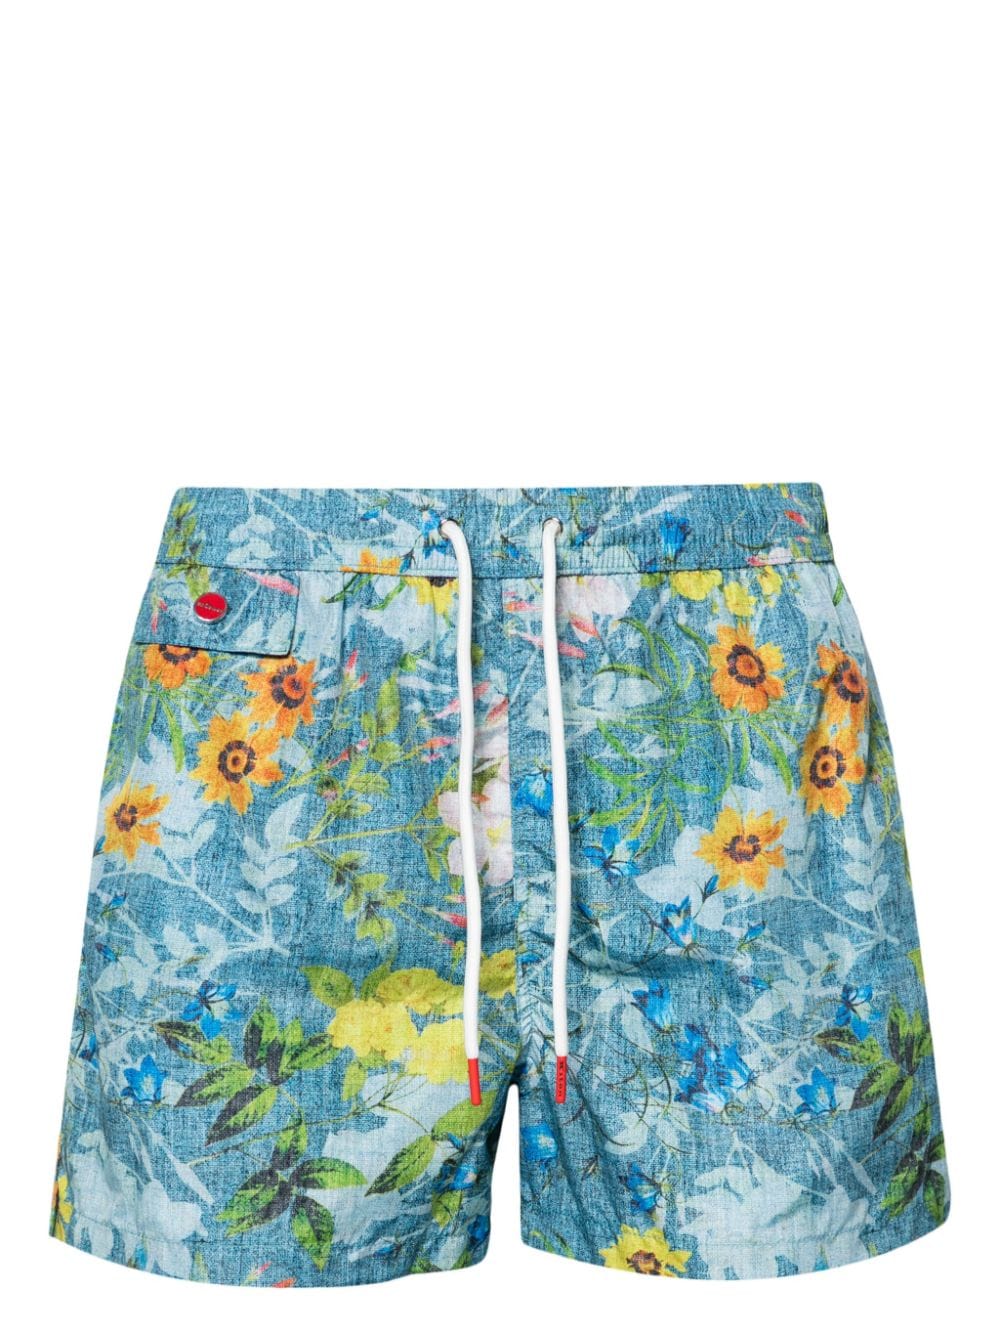 Kiton KITON- Printed Swim Shorts